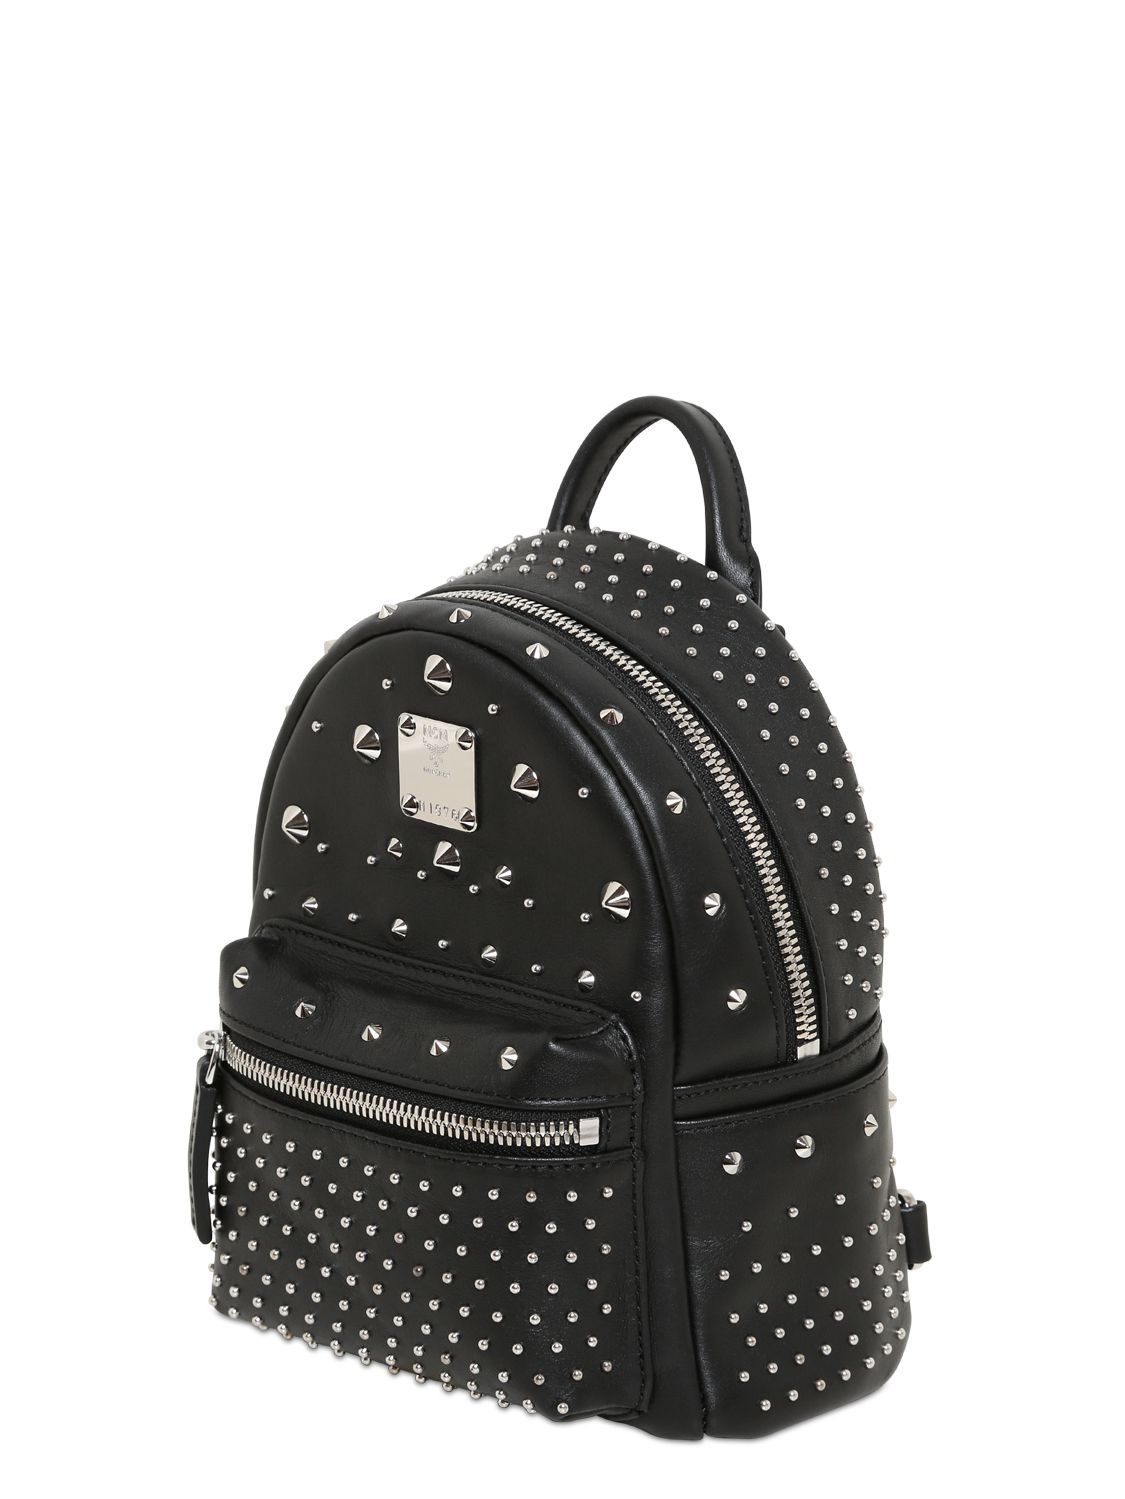 Lyst - Mcm Extra Mini Stark Leather Backpack in Black for Men